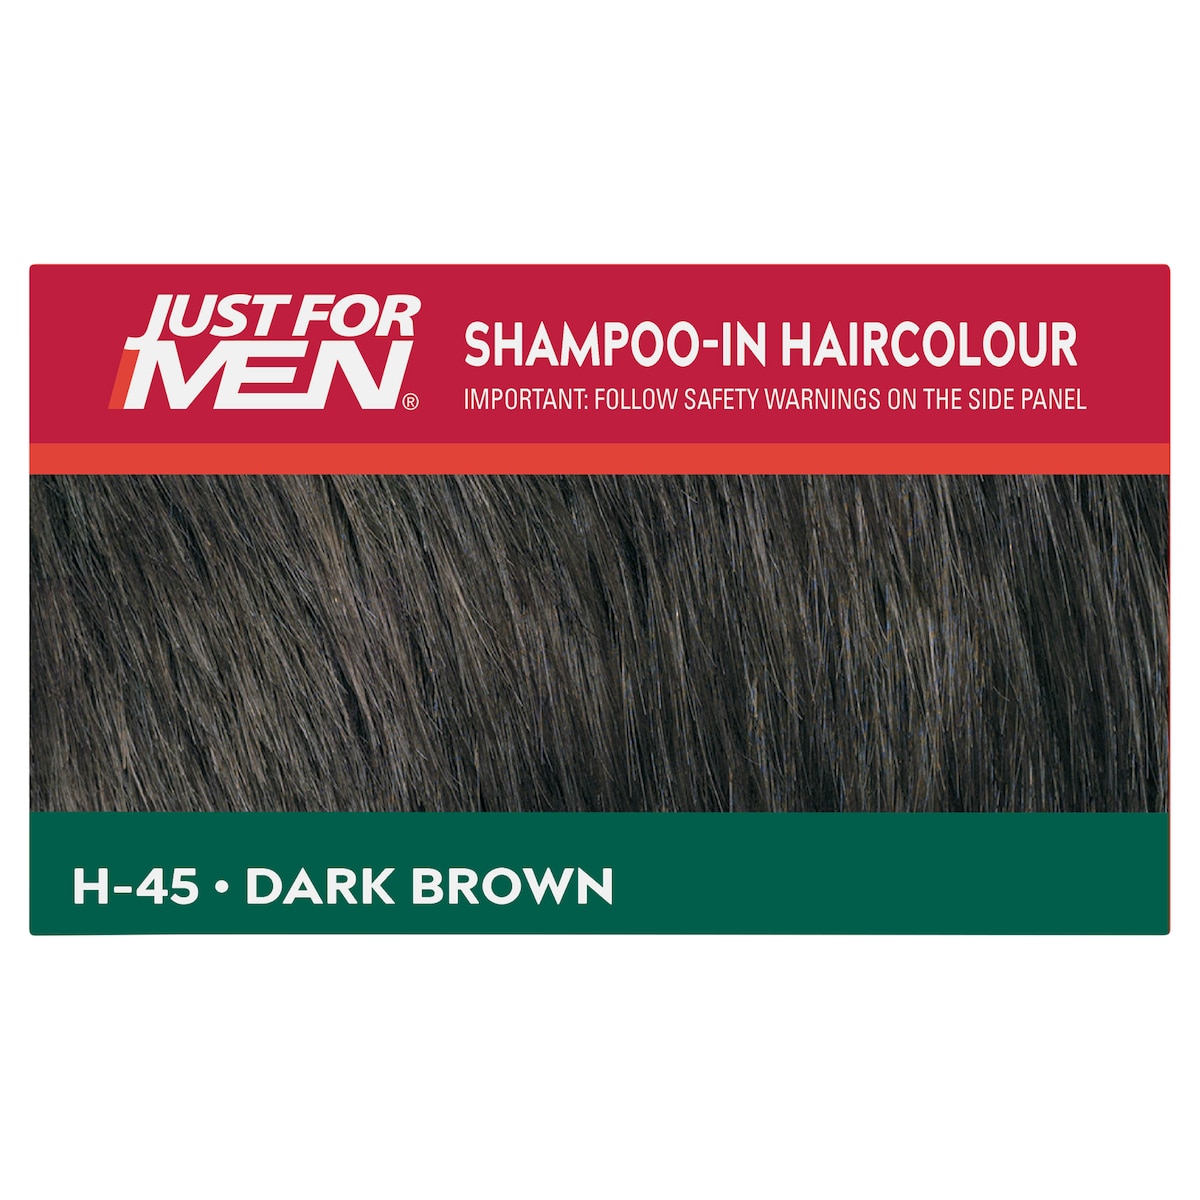 Just for Men Shampoo-In Hair Colour Dark Brown